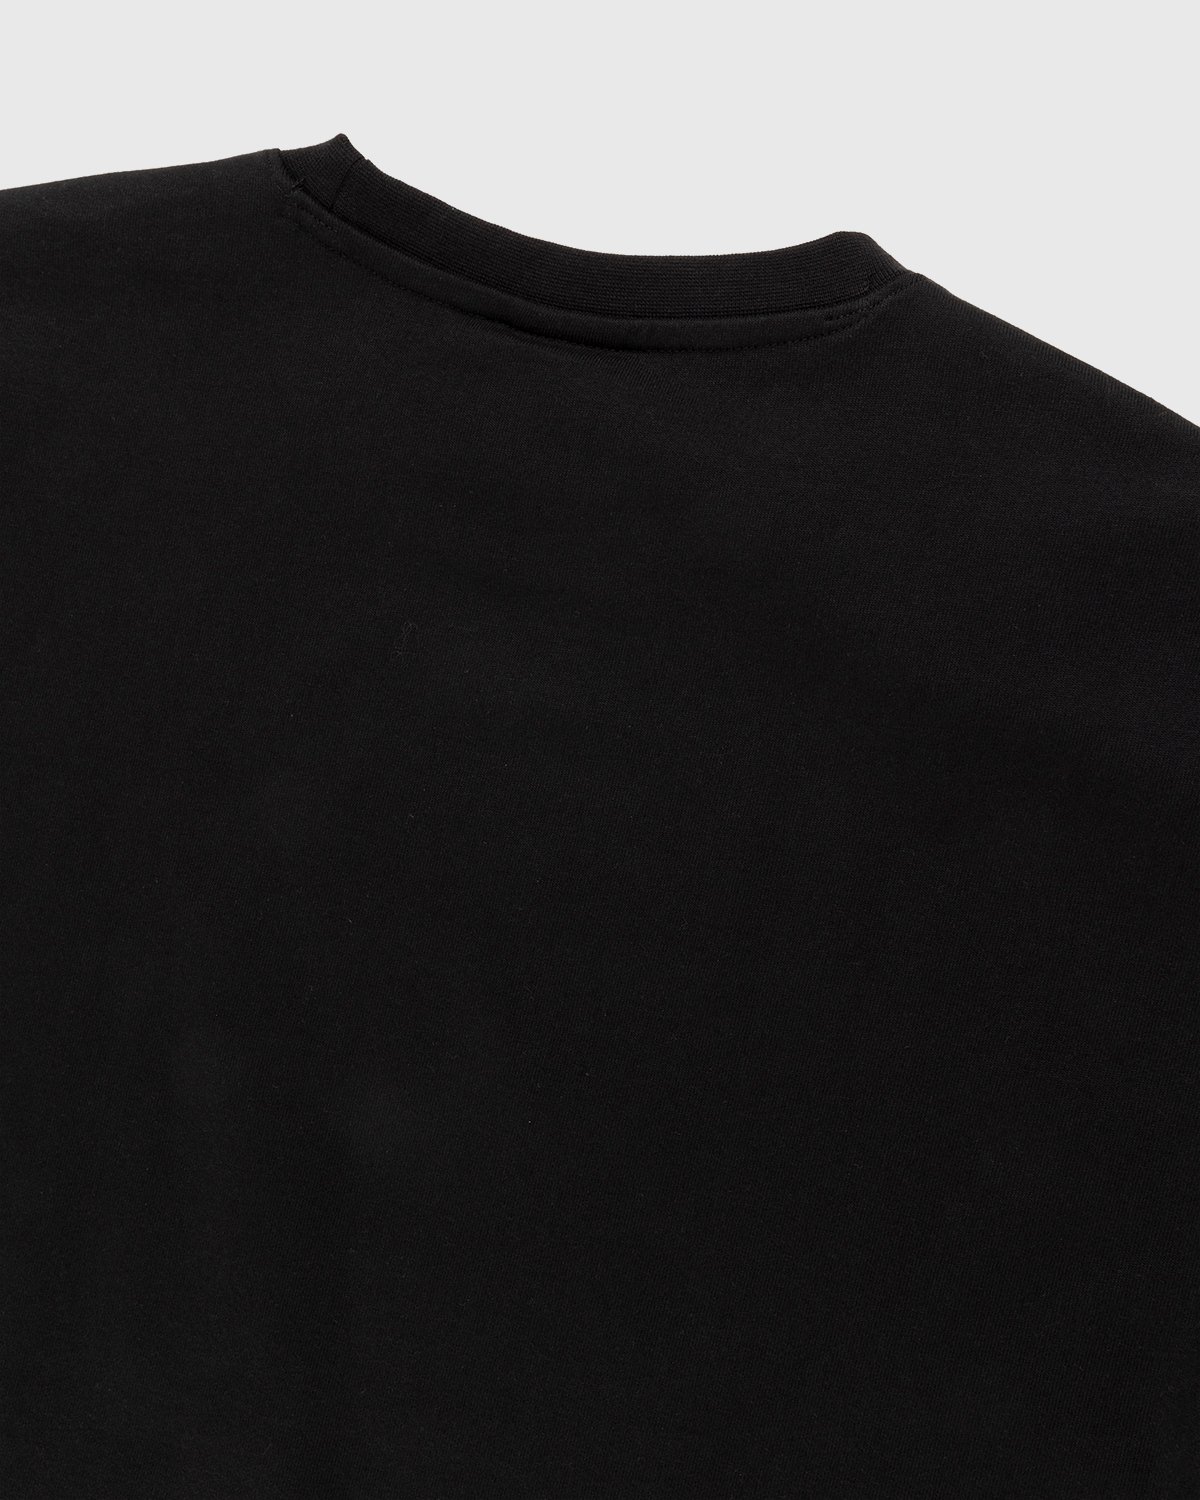 New Balance - Conversations Amongst Us Brand T-Shirt Black - Clothing - Black - Image 3